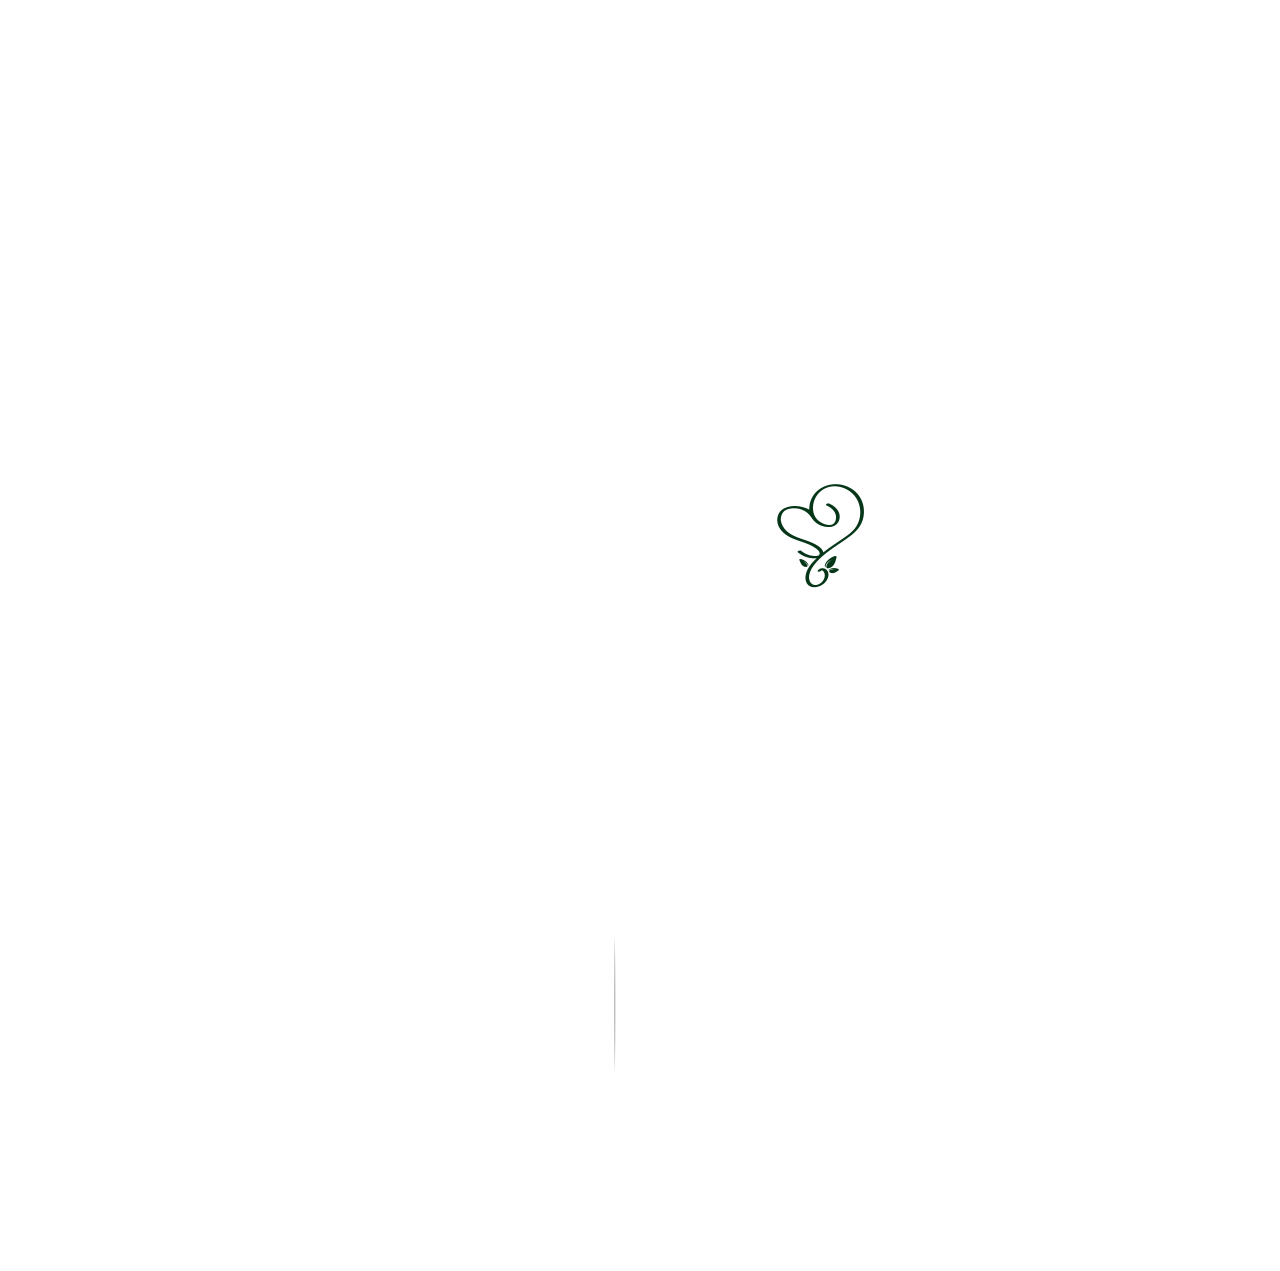 Mona's Memory Lane's logo